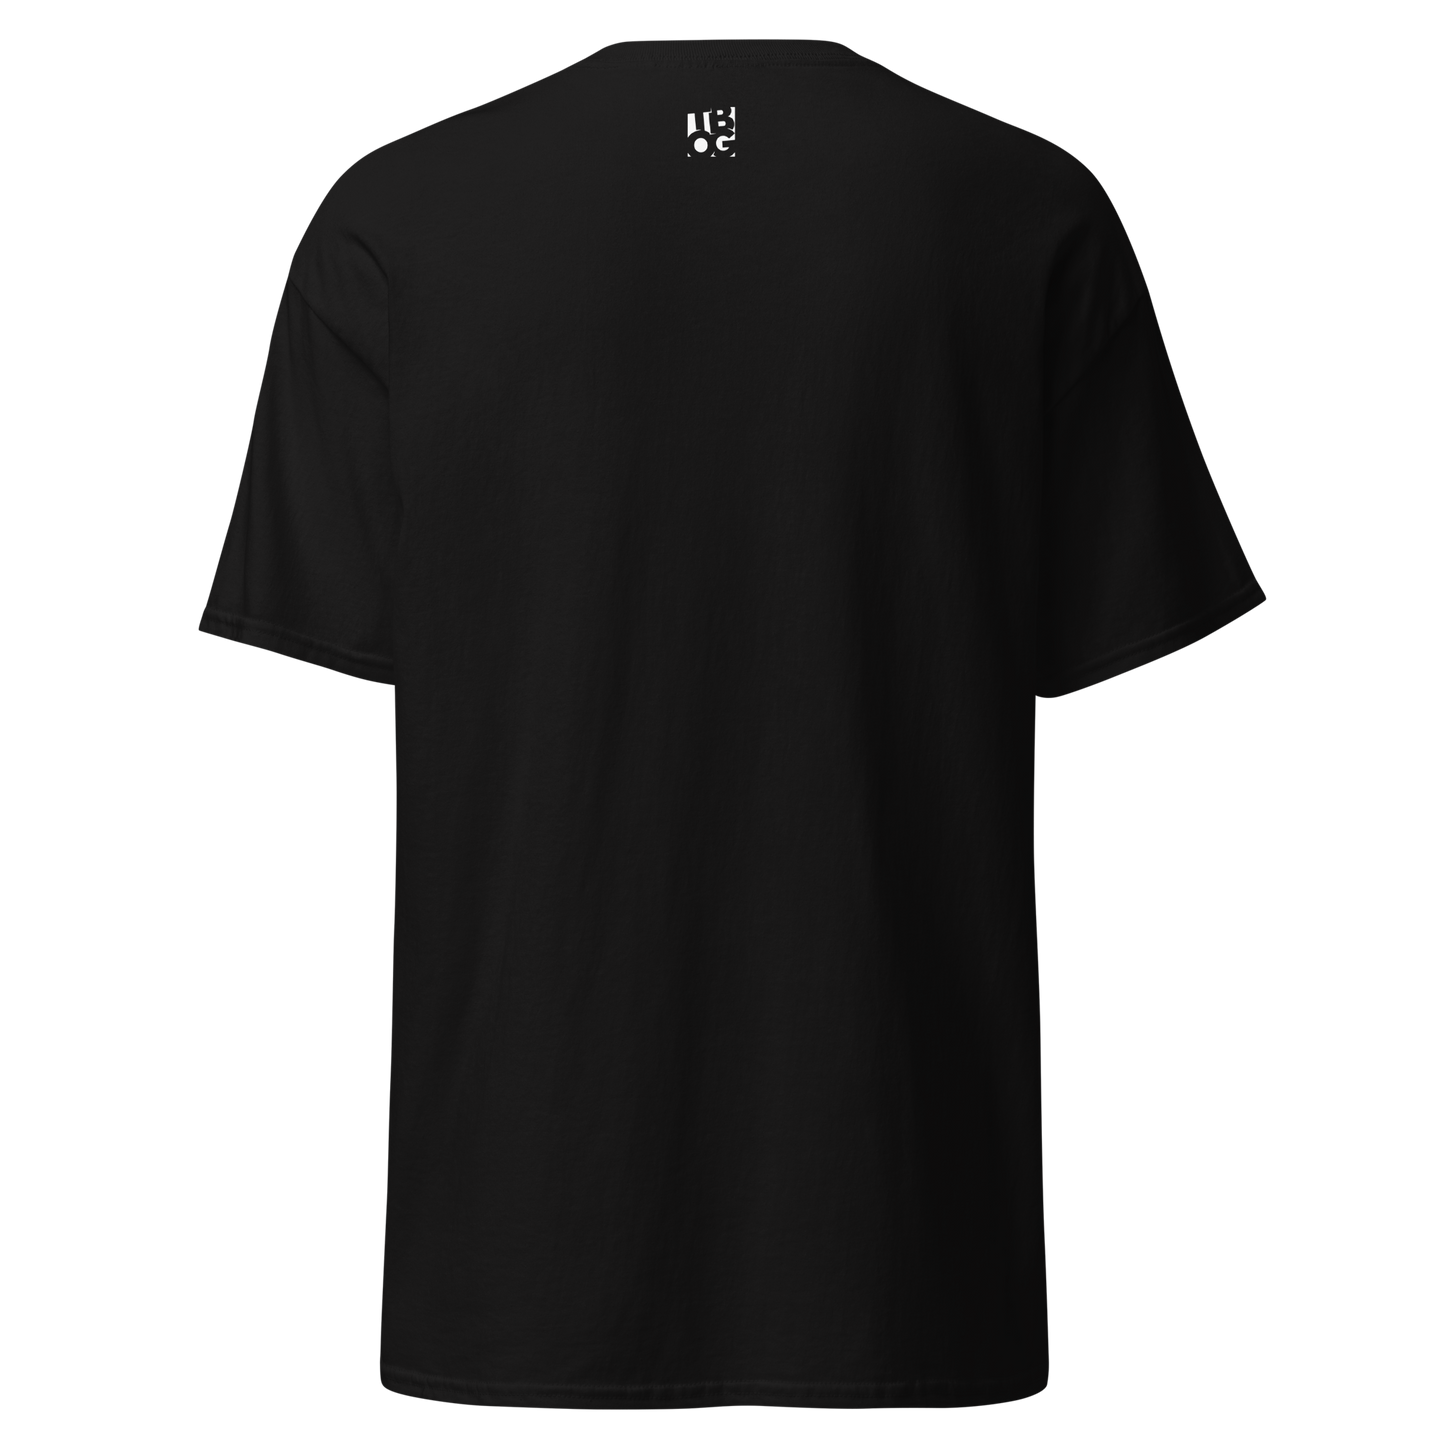 BWSFM T-Shirt(Black)